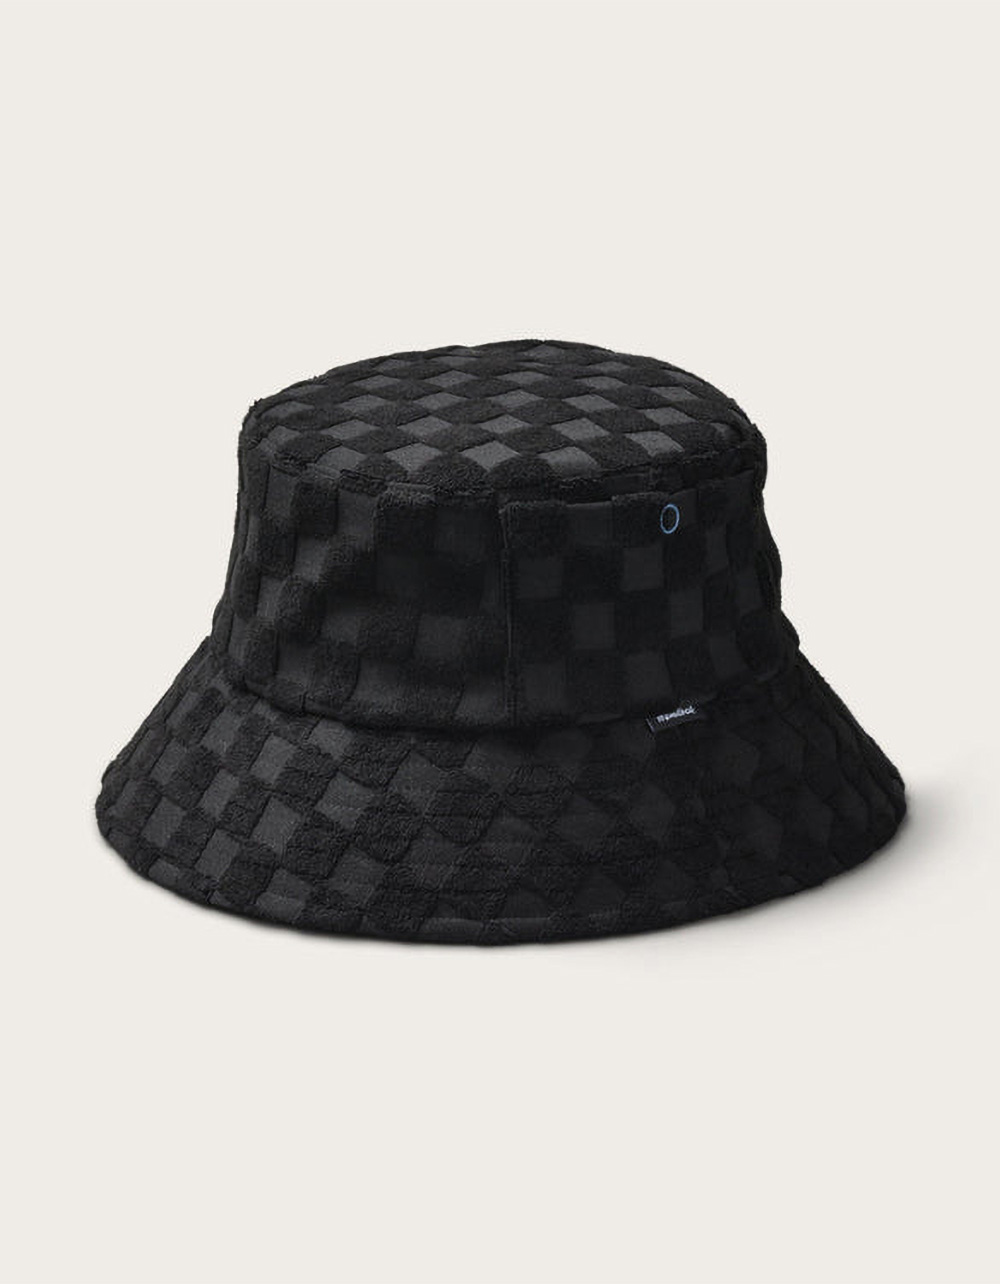 HEMLOCK HAT CO. Marina Bucket Hat